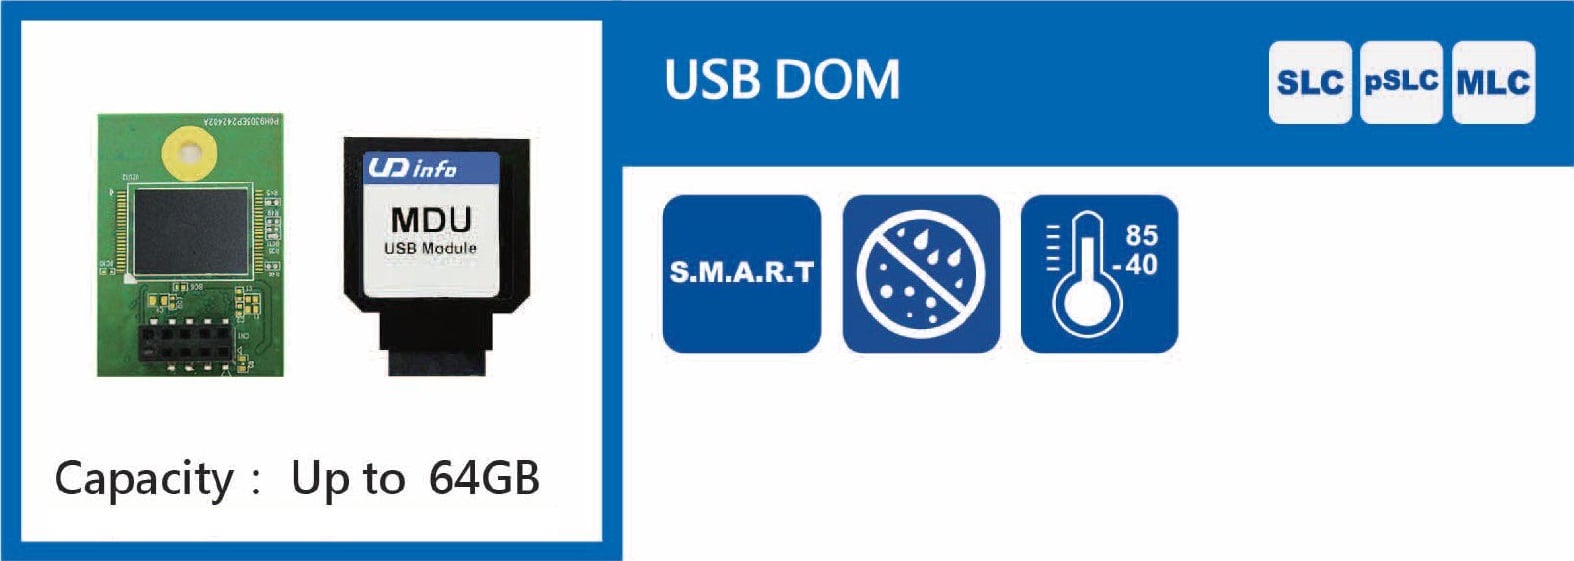 19_USB_DOM